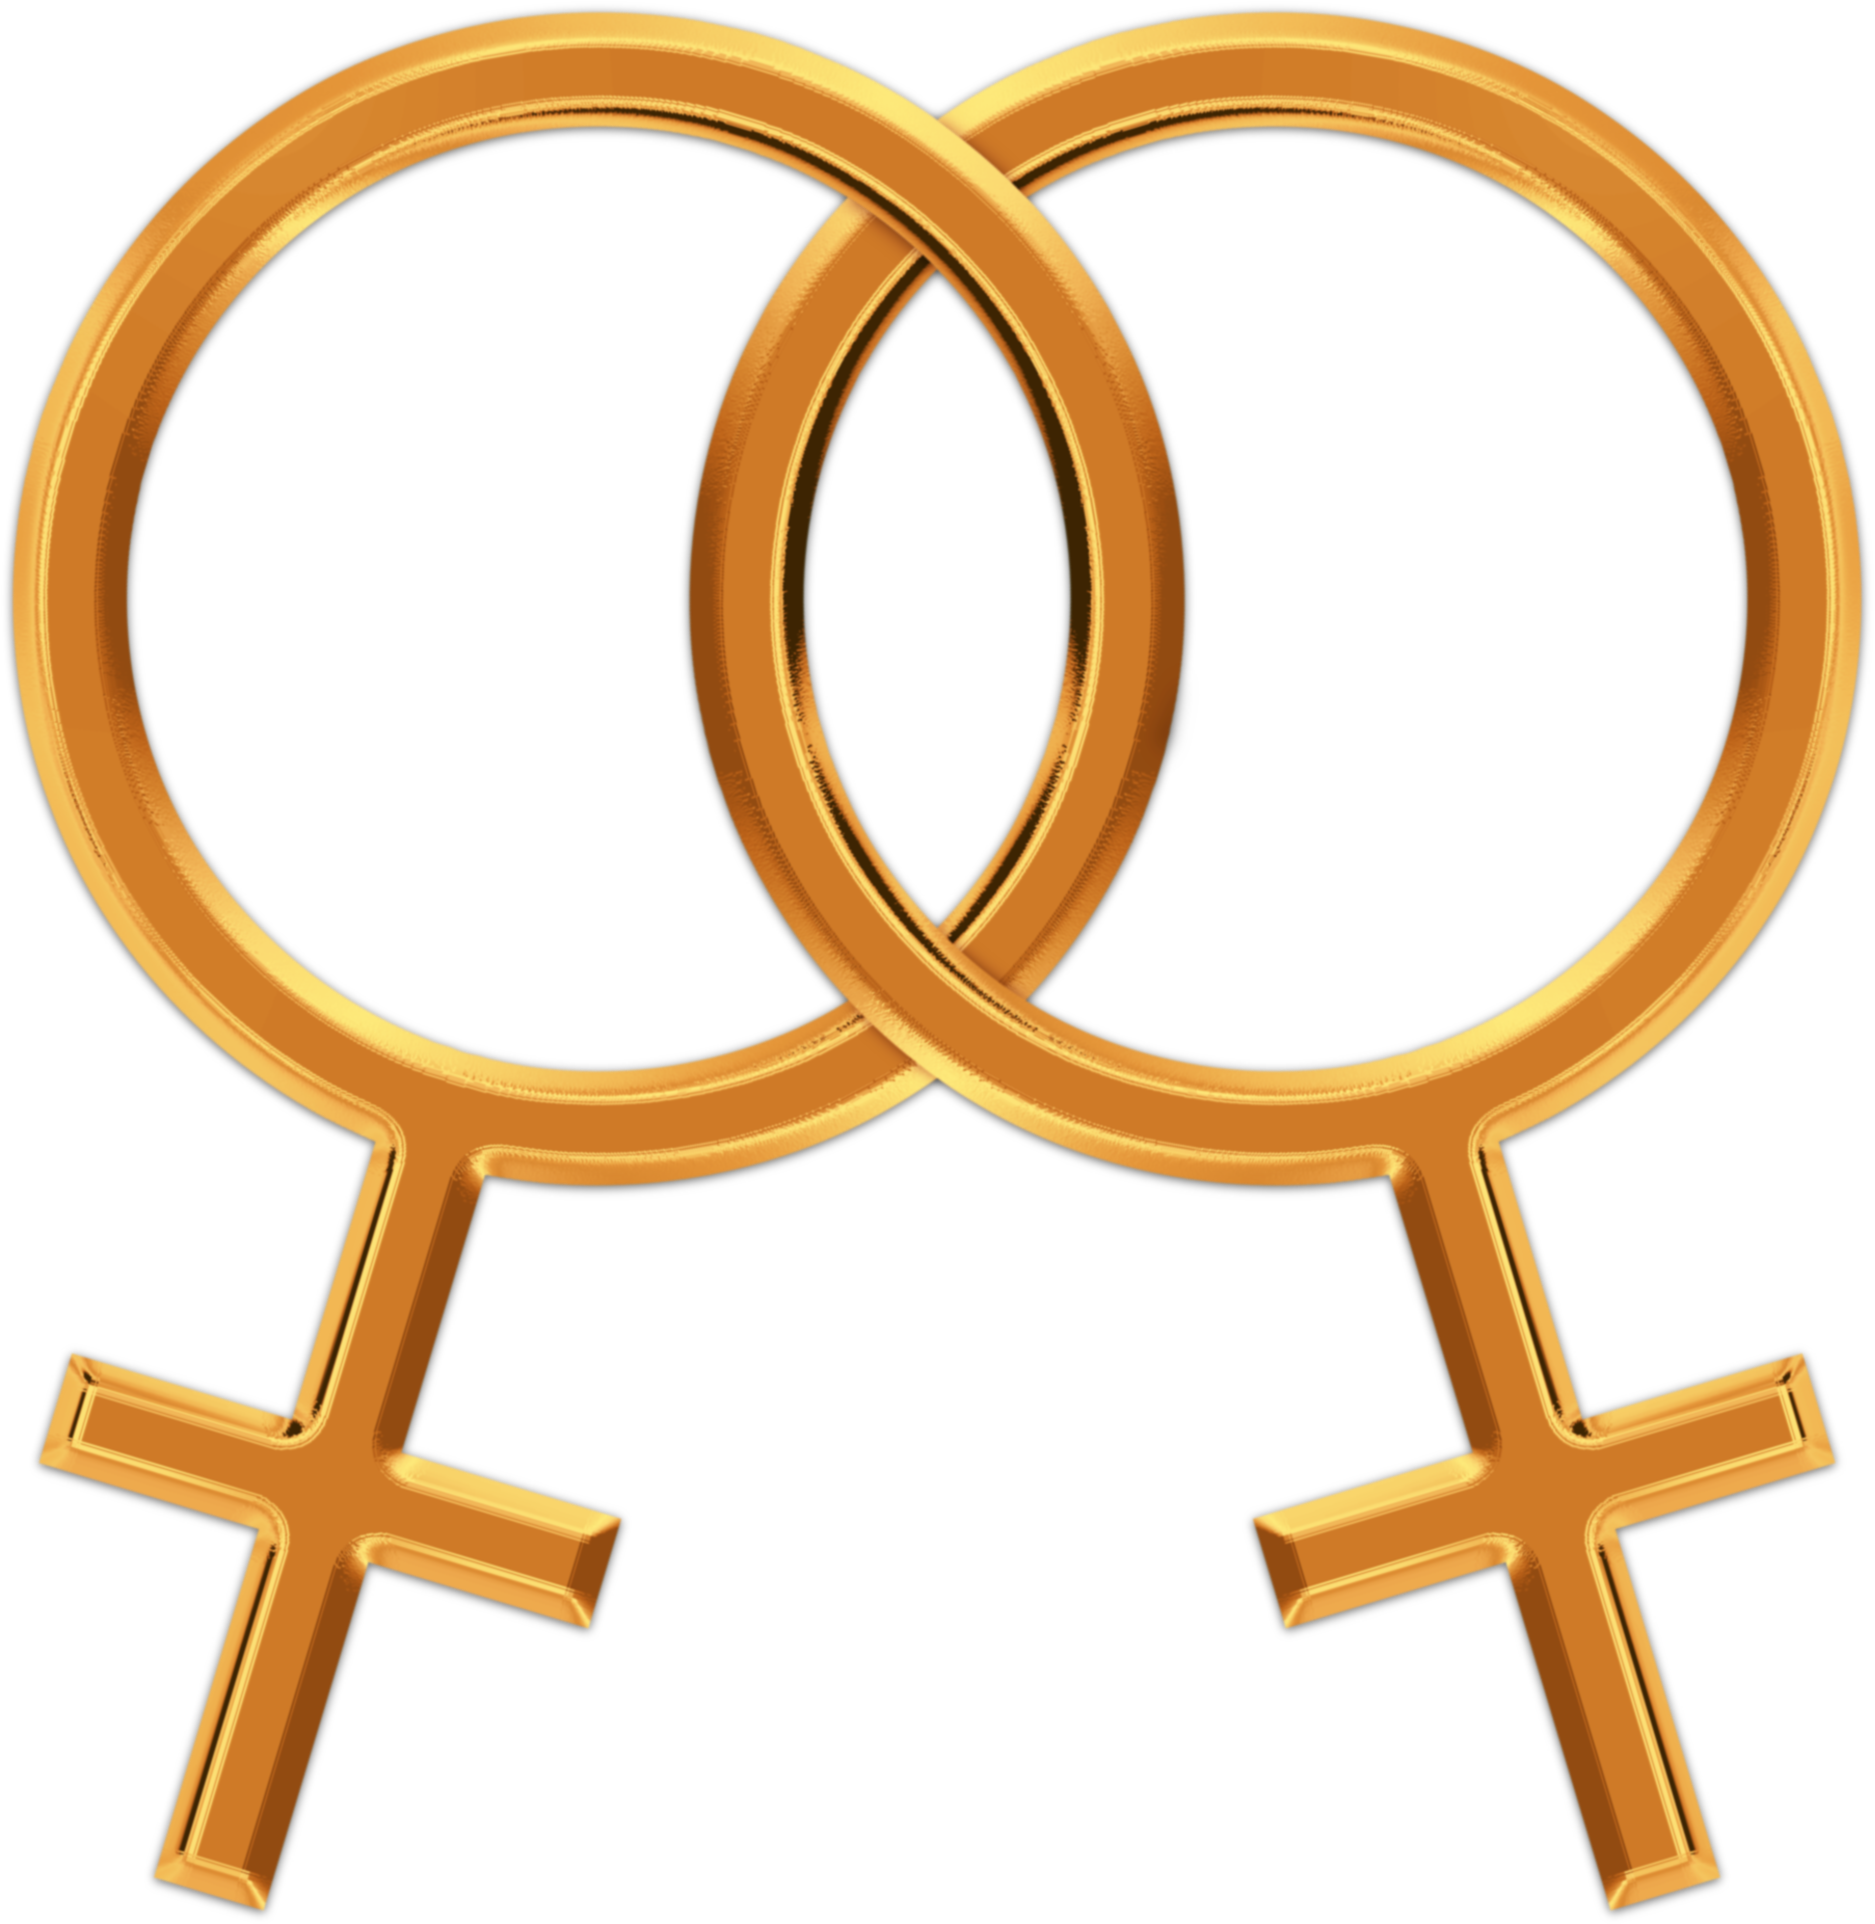 Interlocked Female Symbols Lesbian Pride